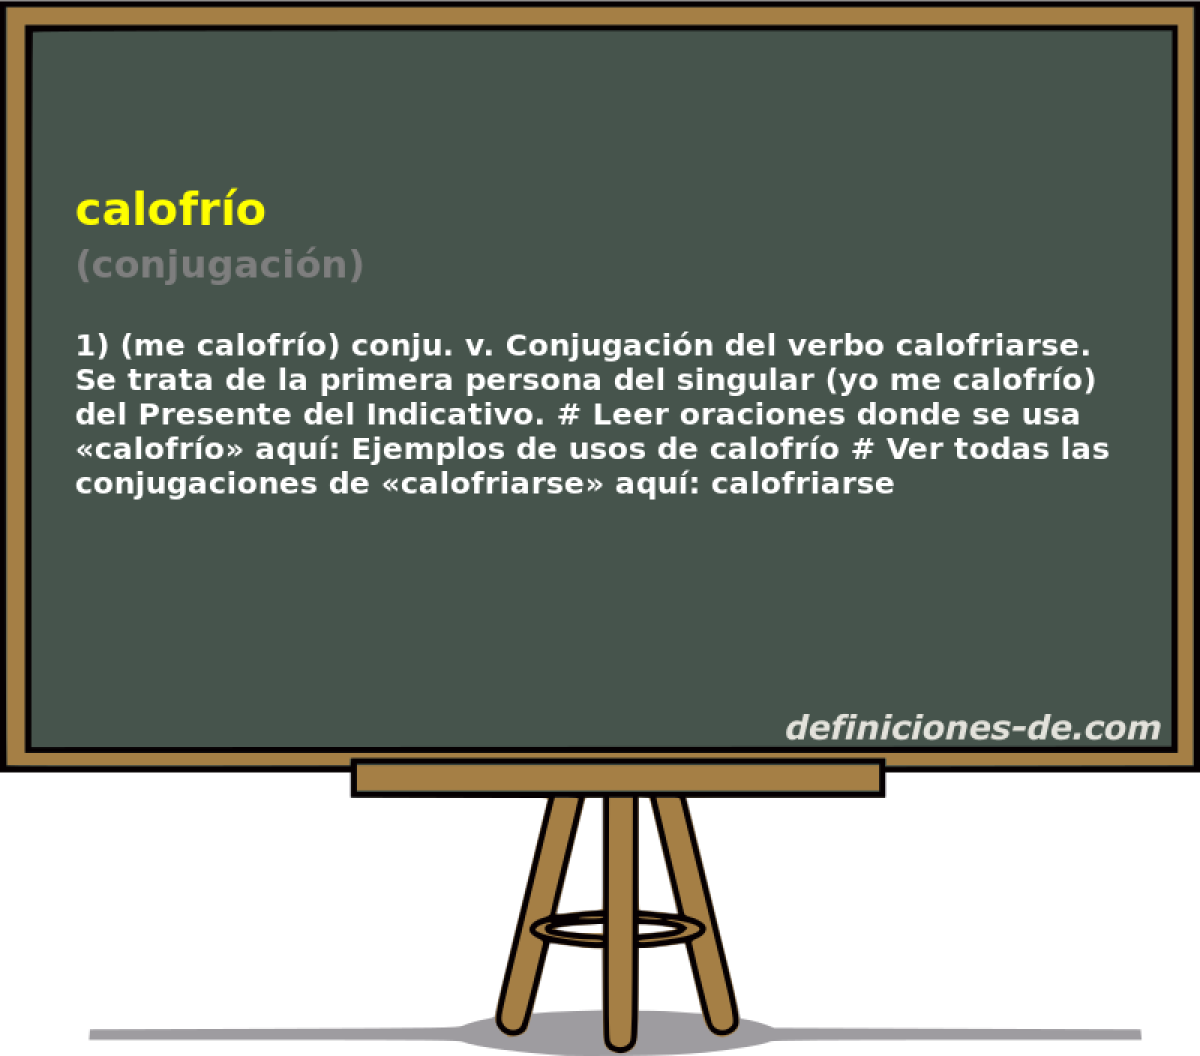 calofro (conjugacin)